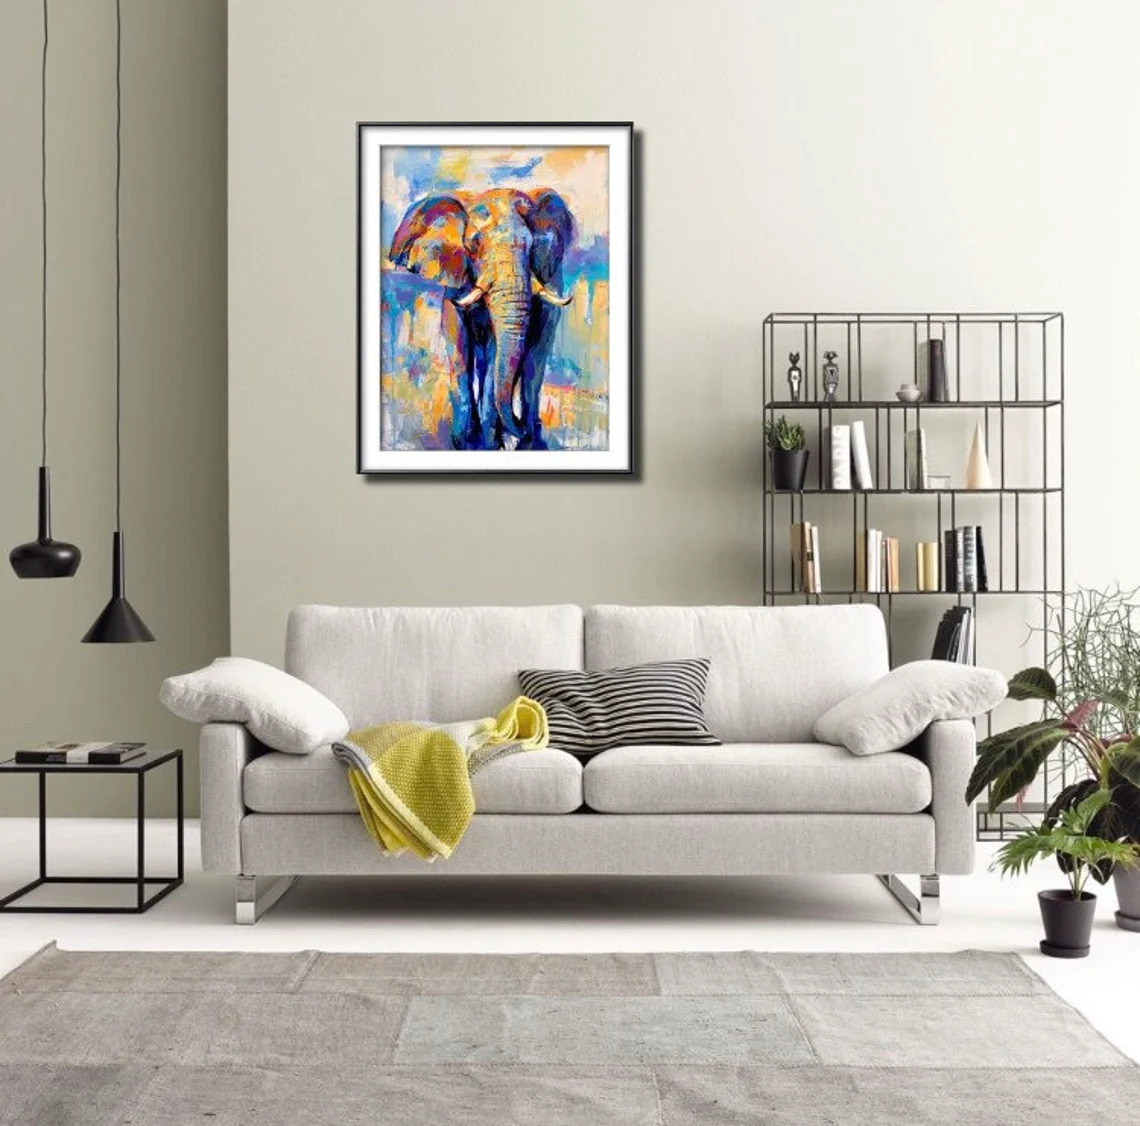 "Morning Walk" - Elephant - Wildlife Artwork Sample on Wall